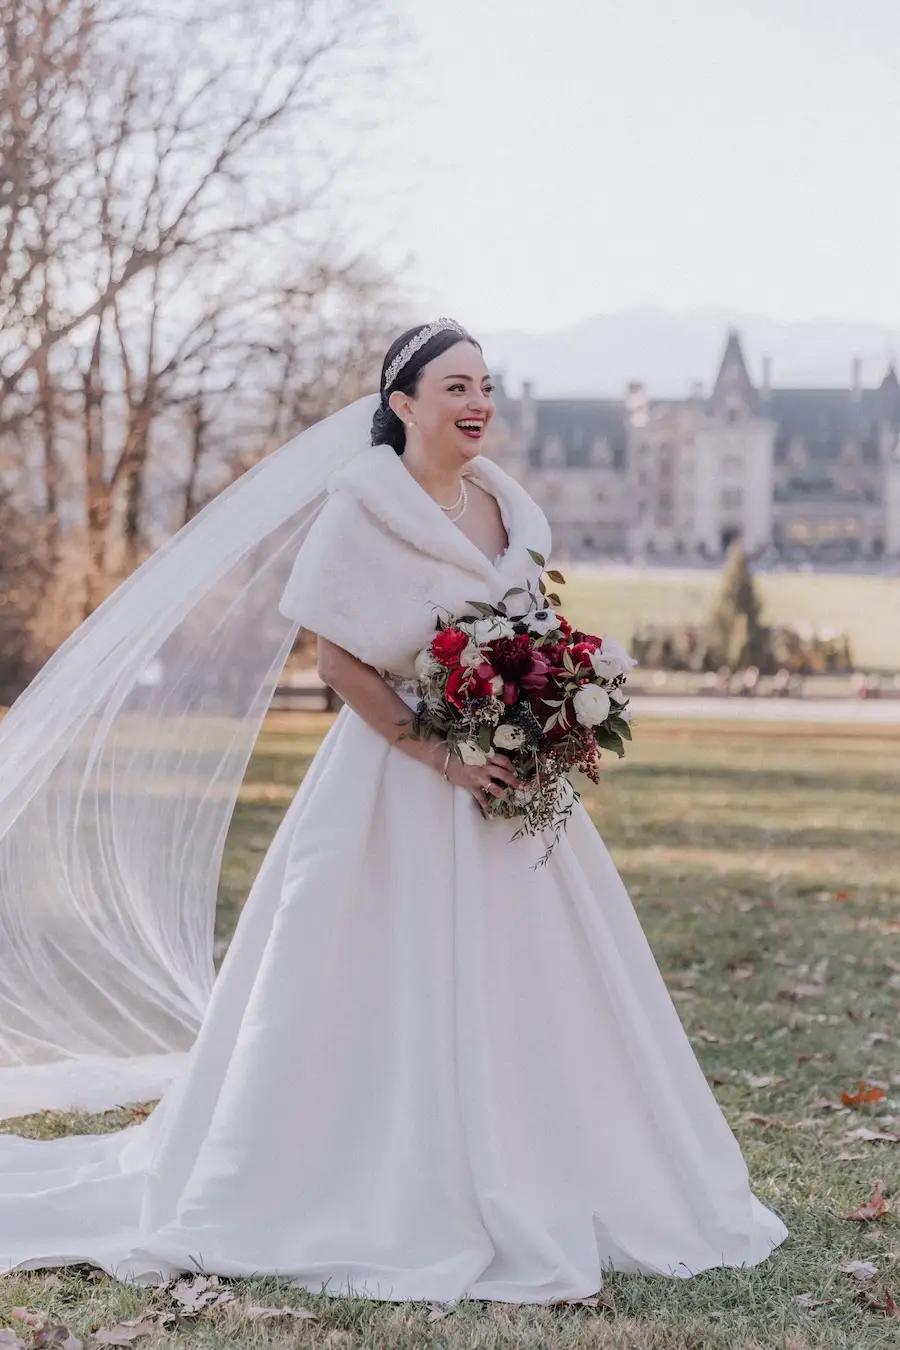 Ameneh Wears Lace Detailed, Strapless Ball Gown Wedding Dress. Desktop Image